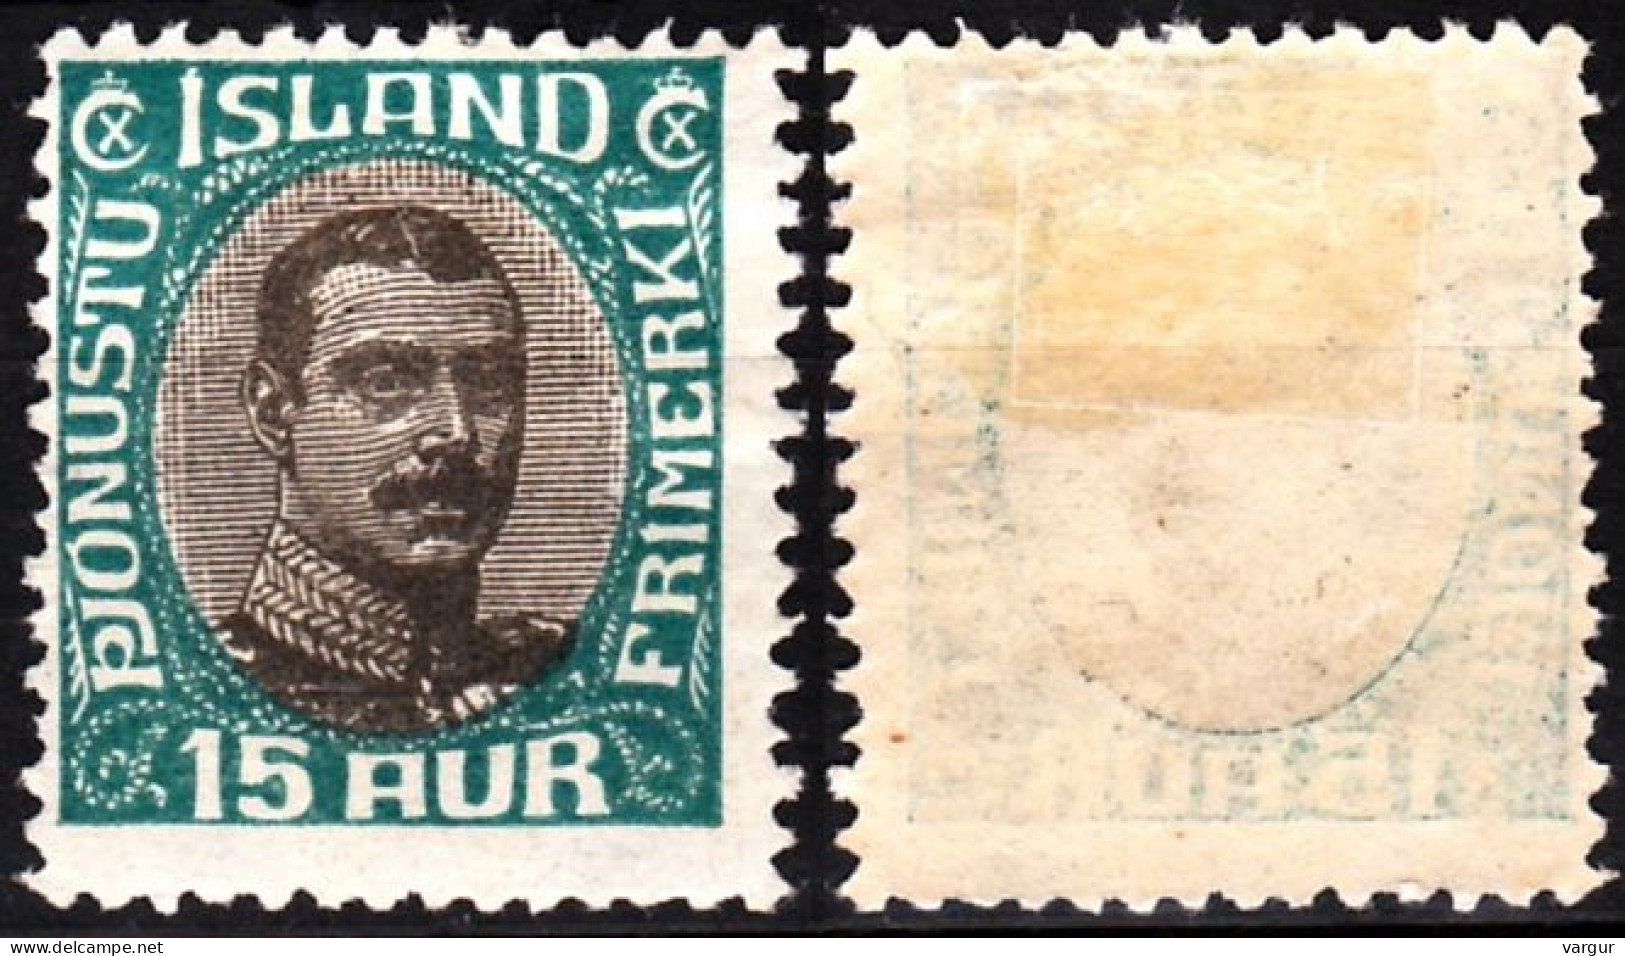 ICELAND / ISLAND Postage Due 1920 King Christian X, 15Aur, MH - Dienstzegels